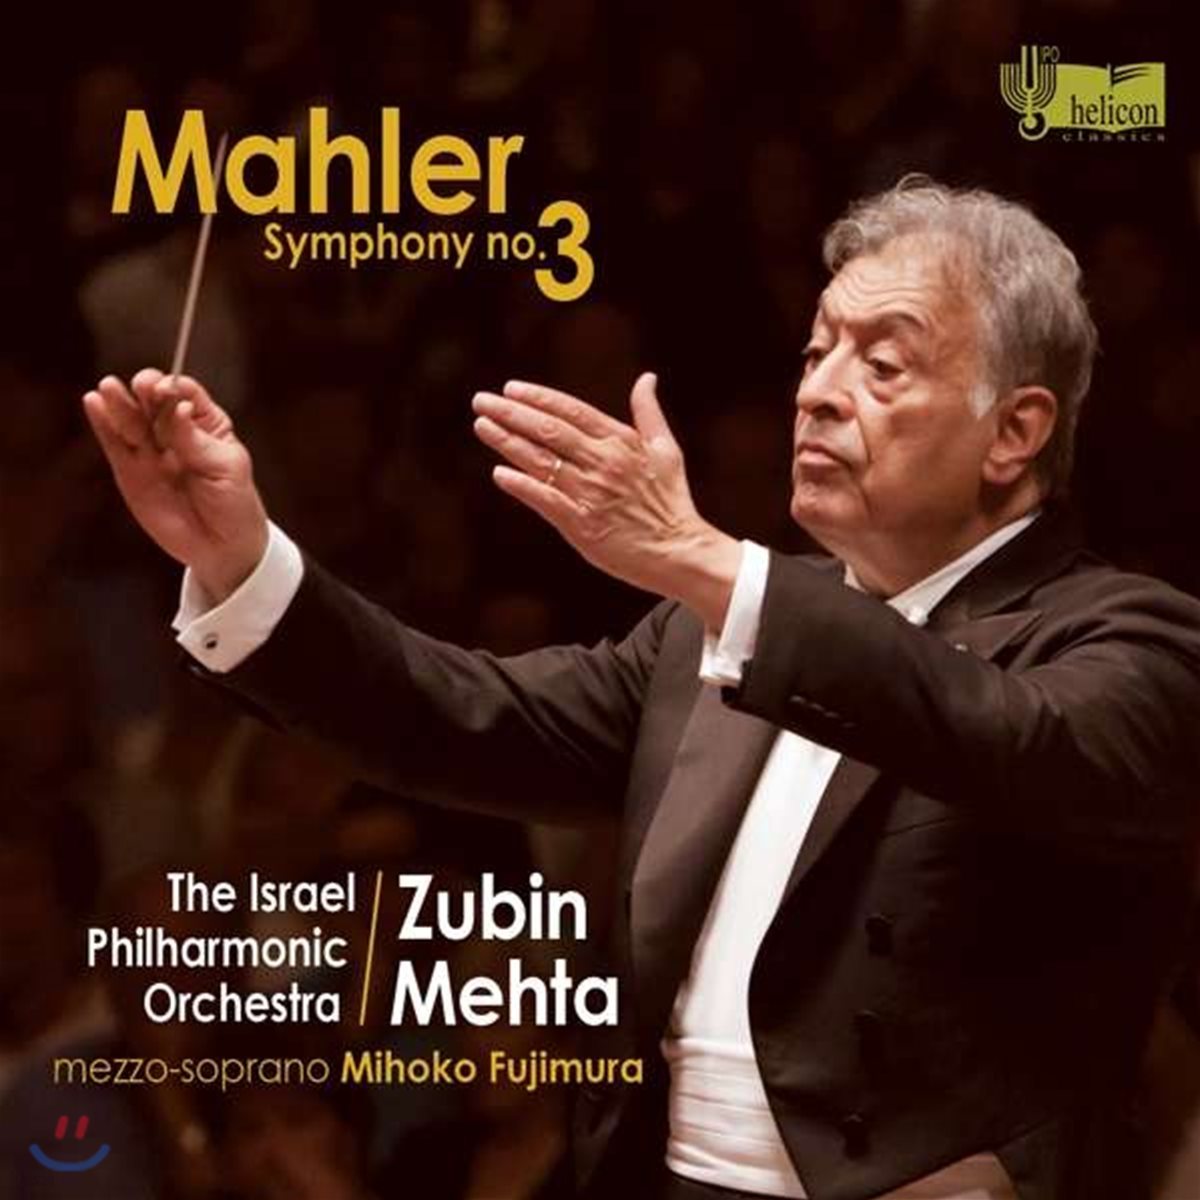 Zubin Metha 말러: 교향곡 3번 (Mahler: Symphony No. 3) 주빈 메타, 이스라엘 필하모닉 오케스트라